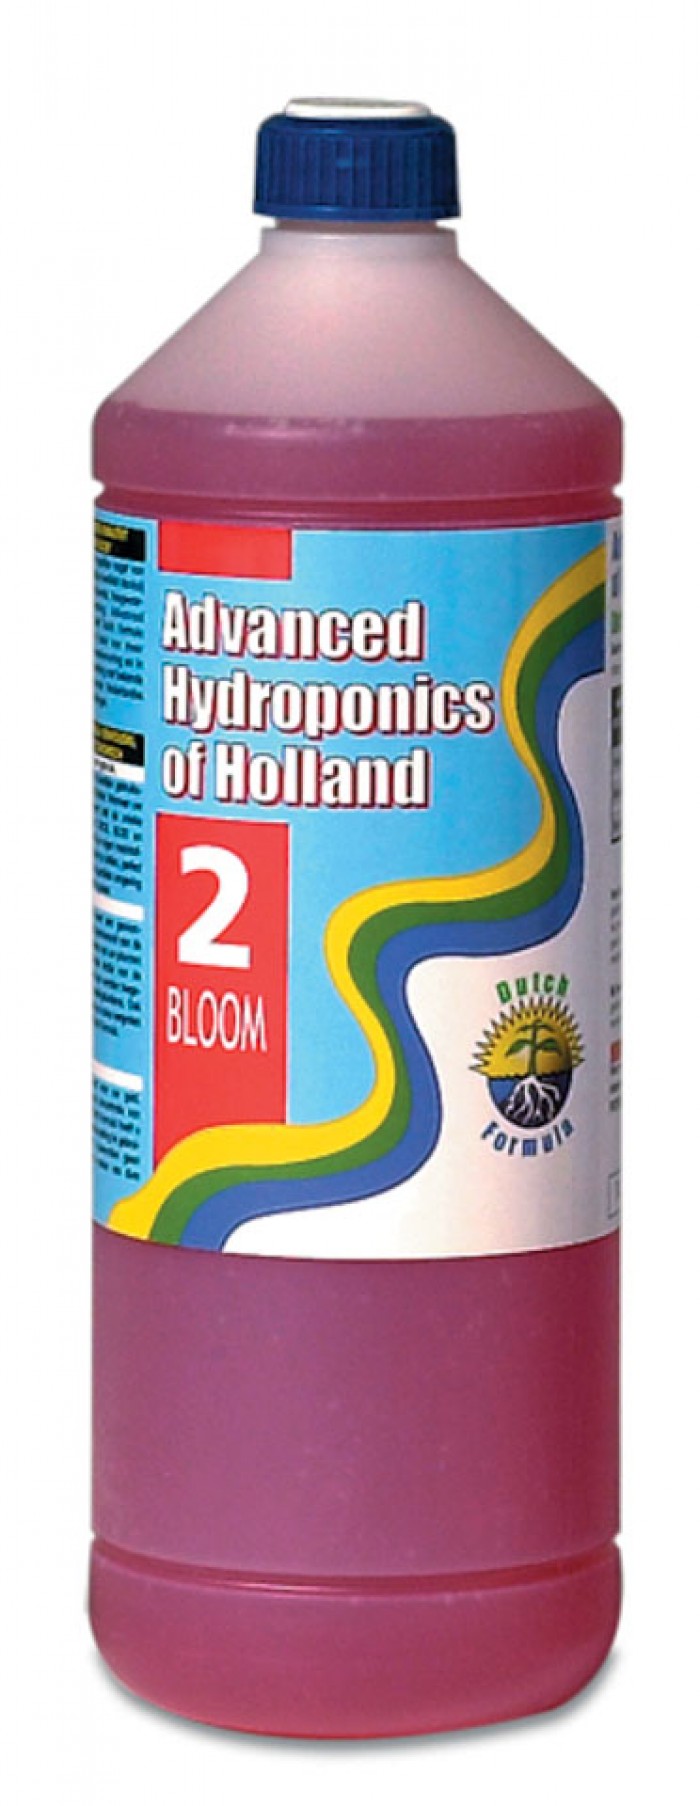 Dutch Fórmula Bloom 2 (Advanced Hydroponics)